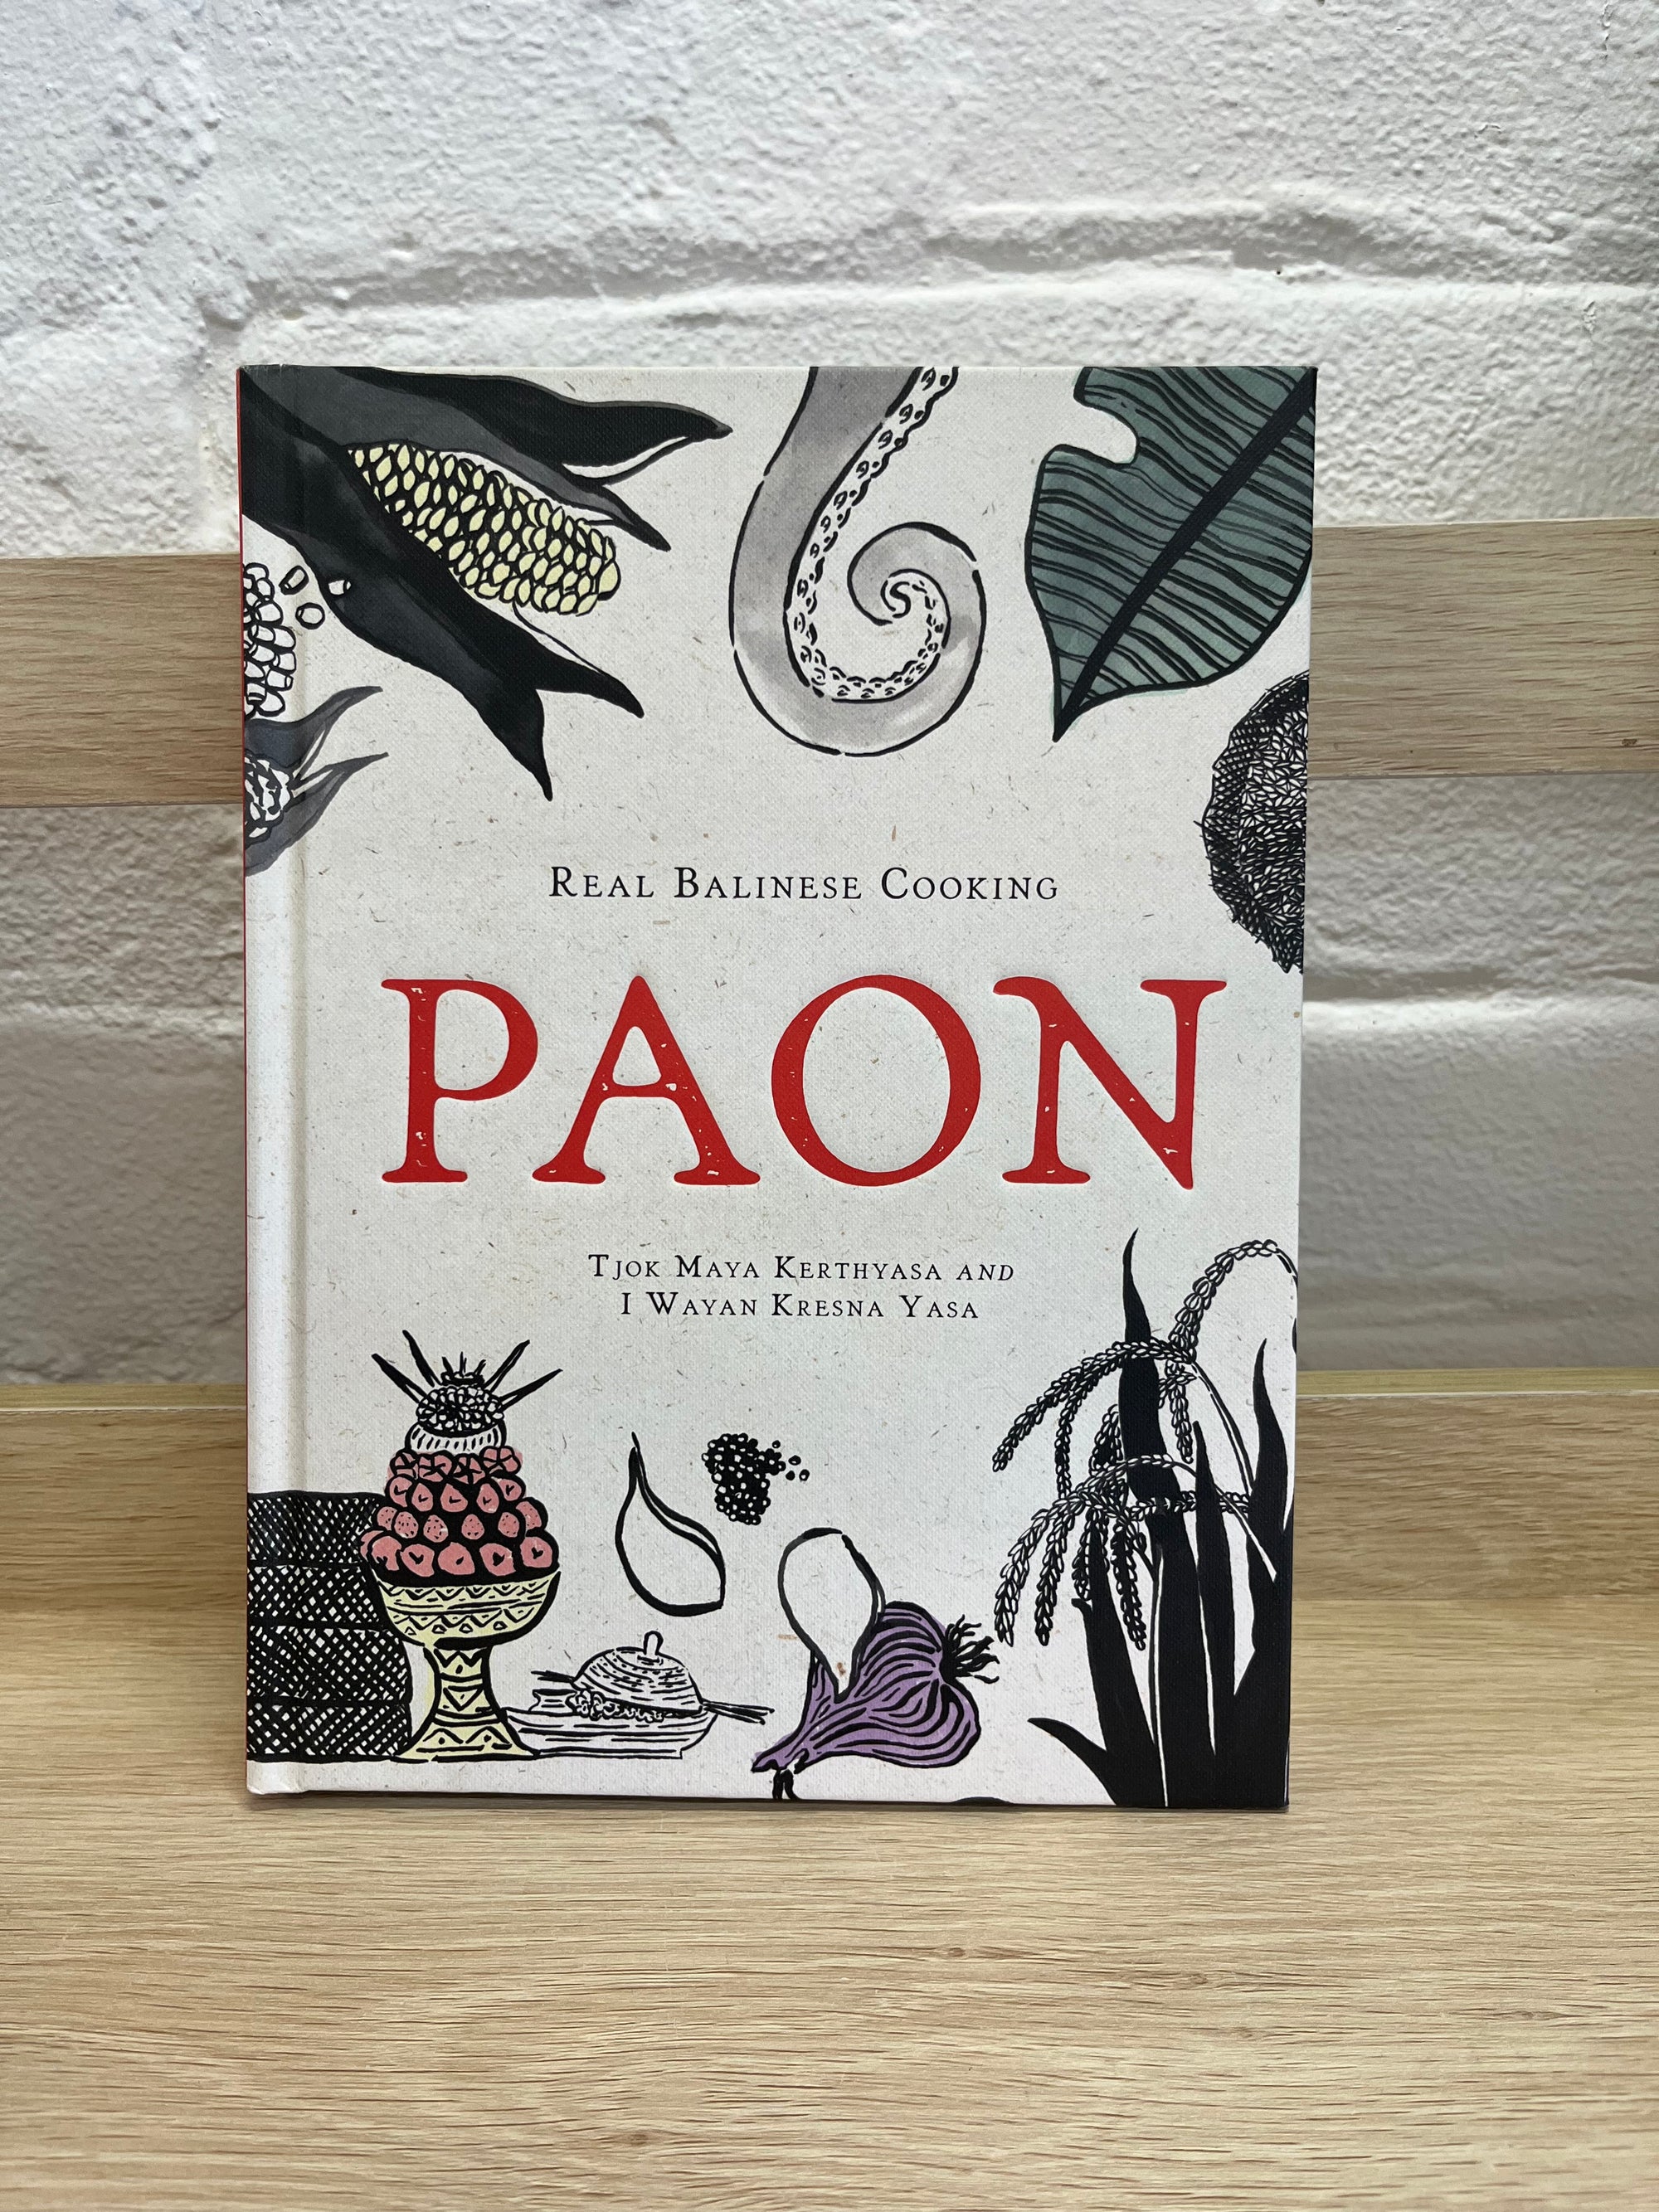 Paon - Real Balinese Cooking